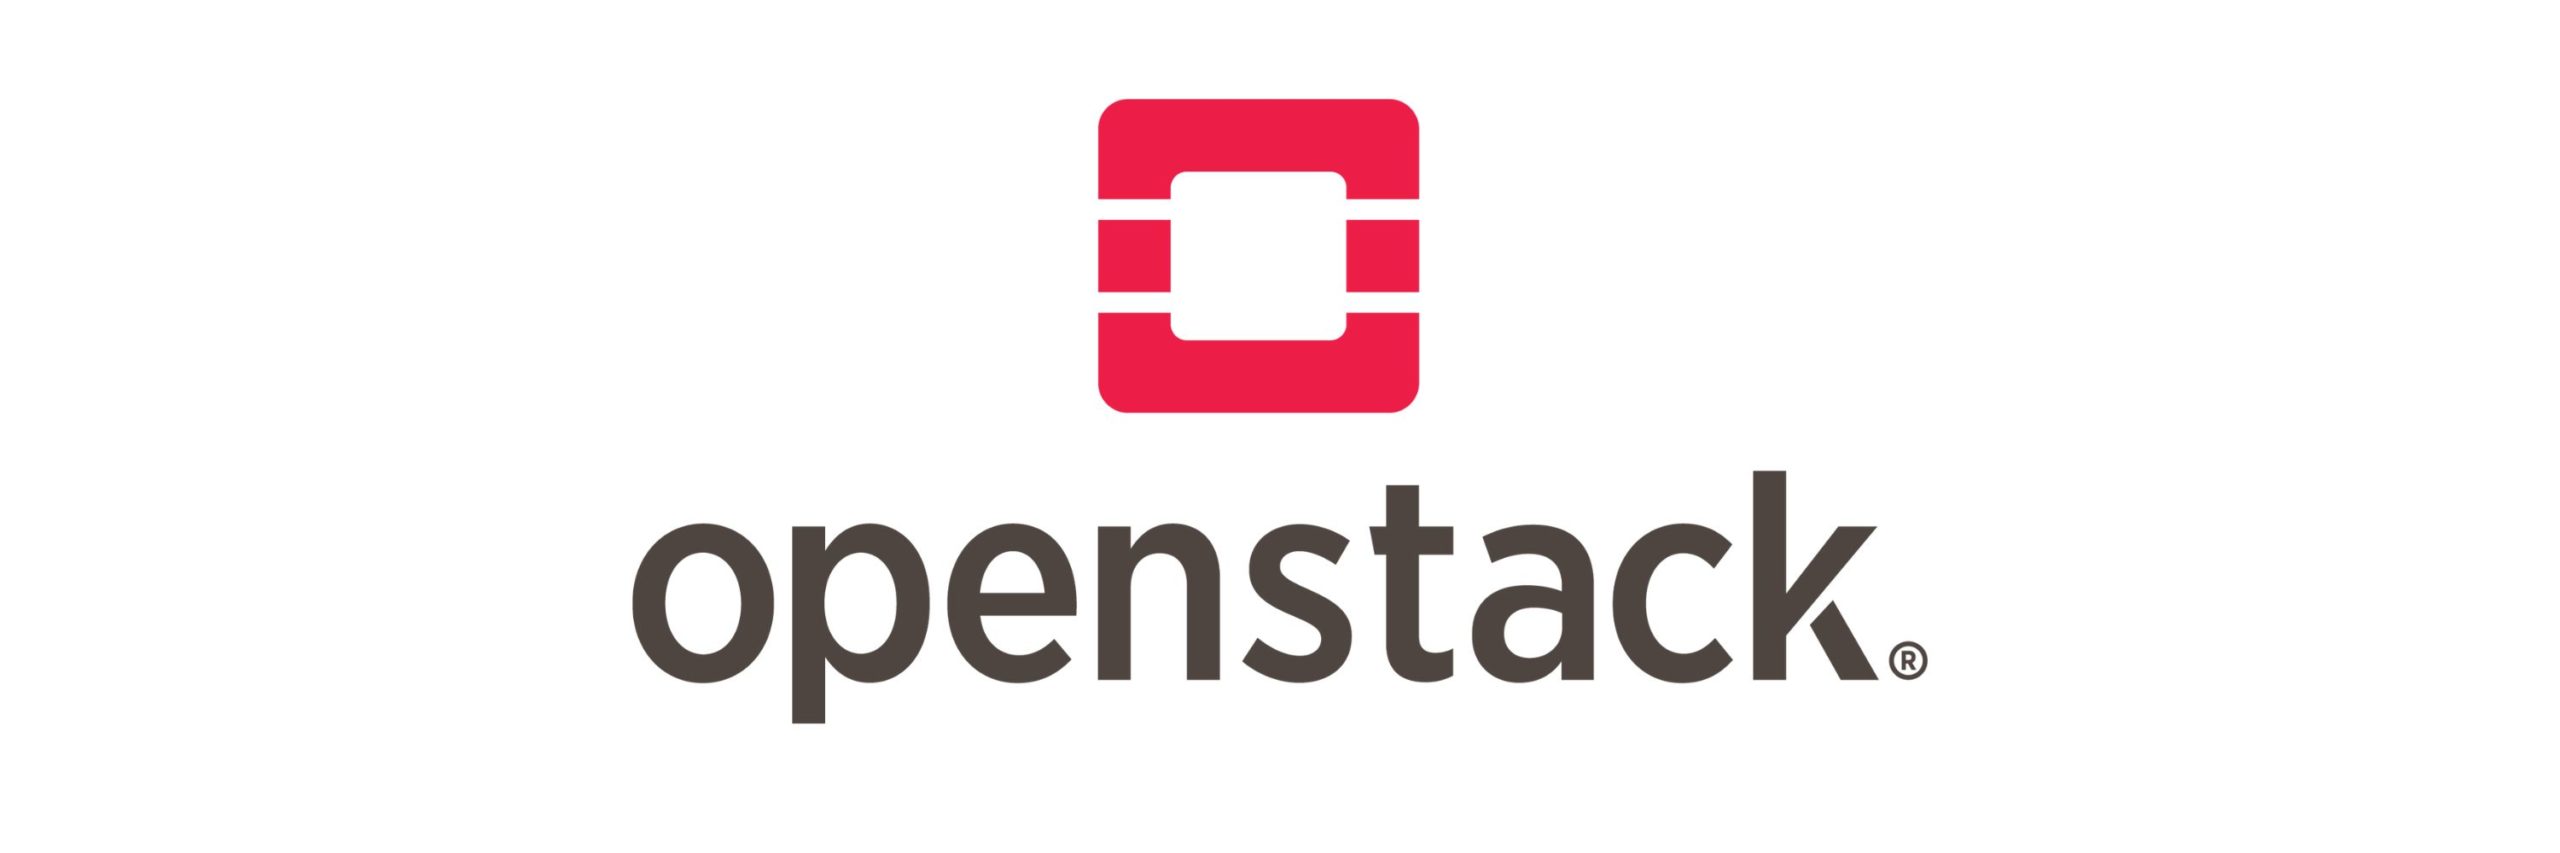 Openstack_Logo.